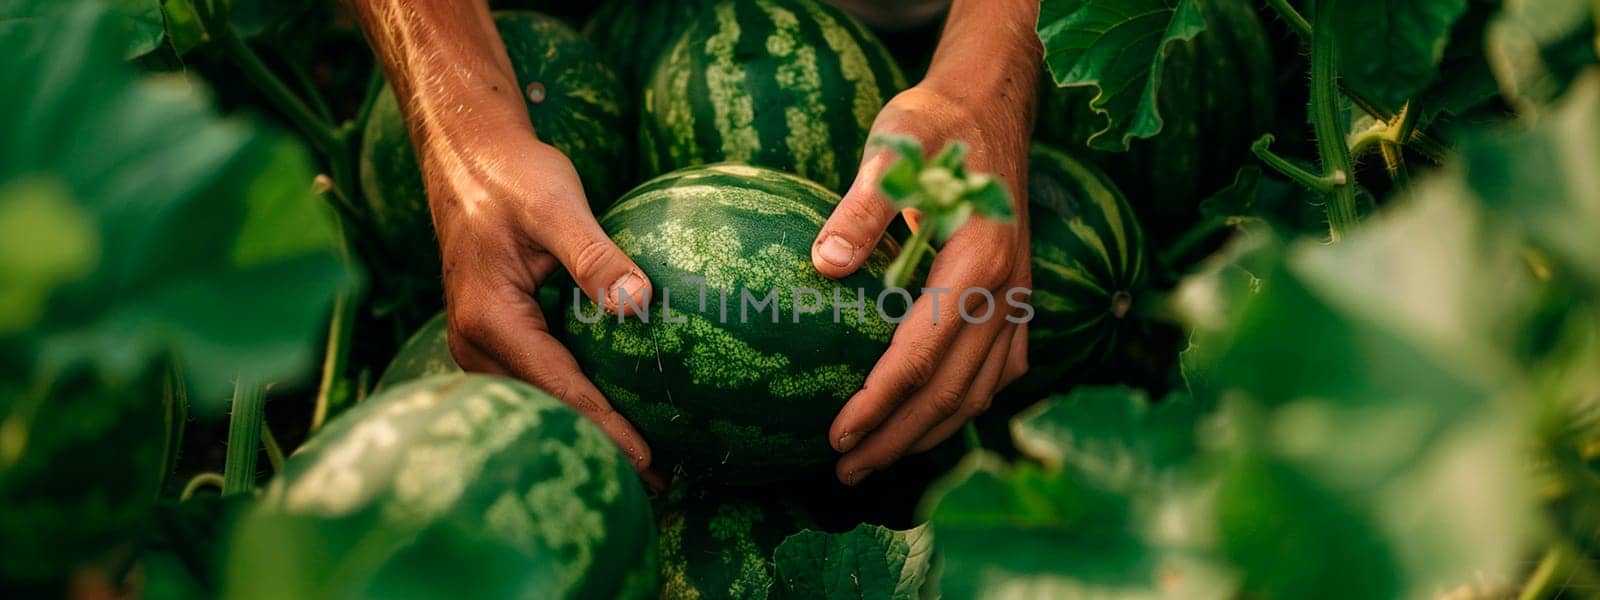 watermelon harvest on the field. Selective focus. by yanadjana